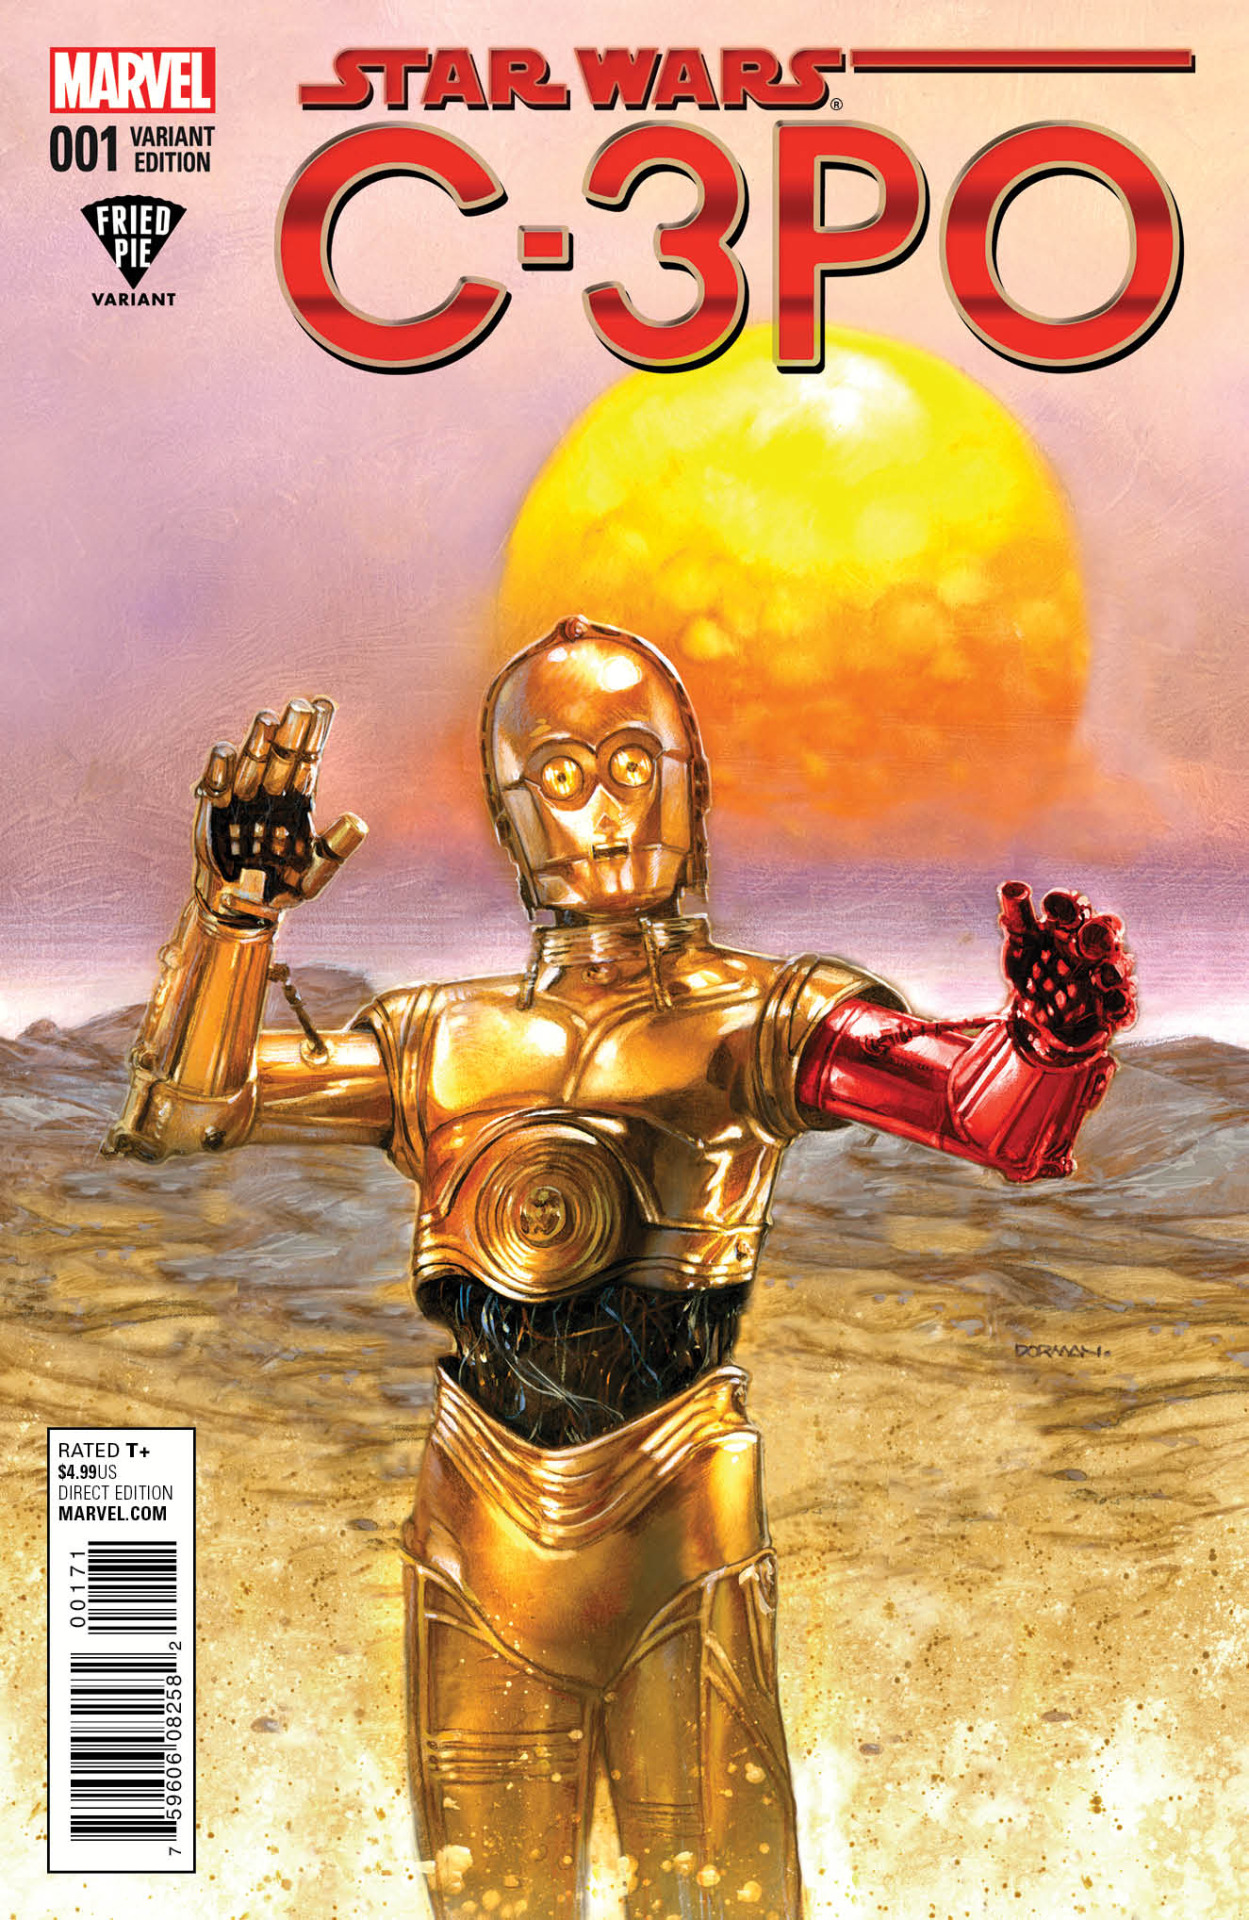 Star Wars Special: C-3PO #1 (Dave Dorman Fried Pie/BAM Variant Cover) (13.04.2016)